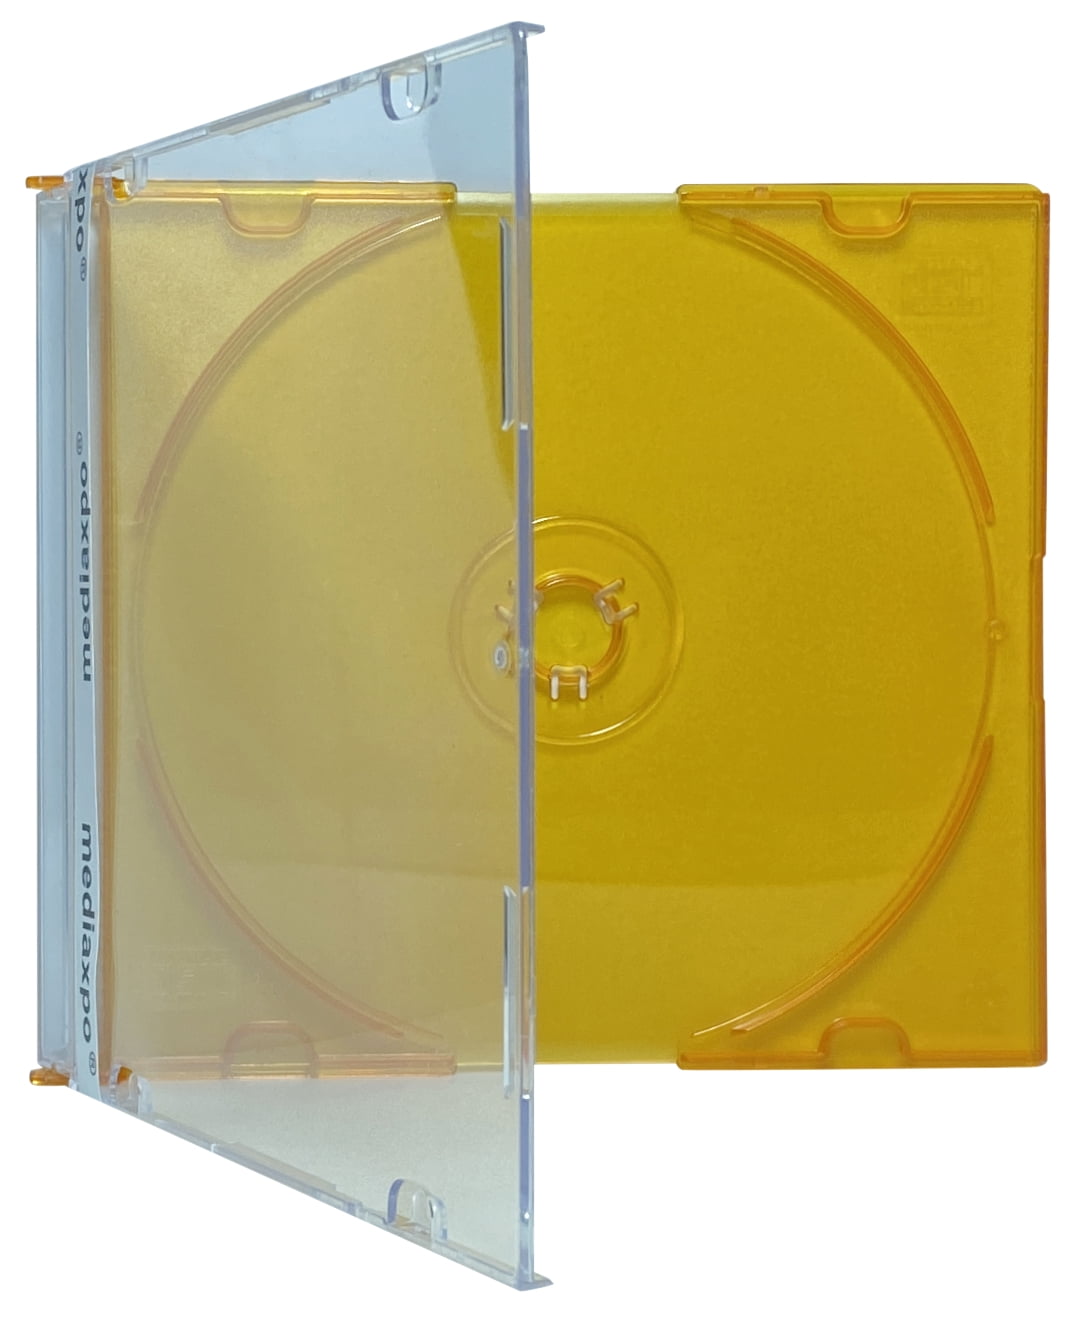 Single CD Maxi Jewel Case 5.2mm Spine Slim Orange Tray New Empty Replacement 